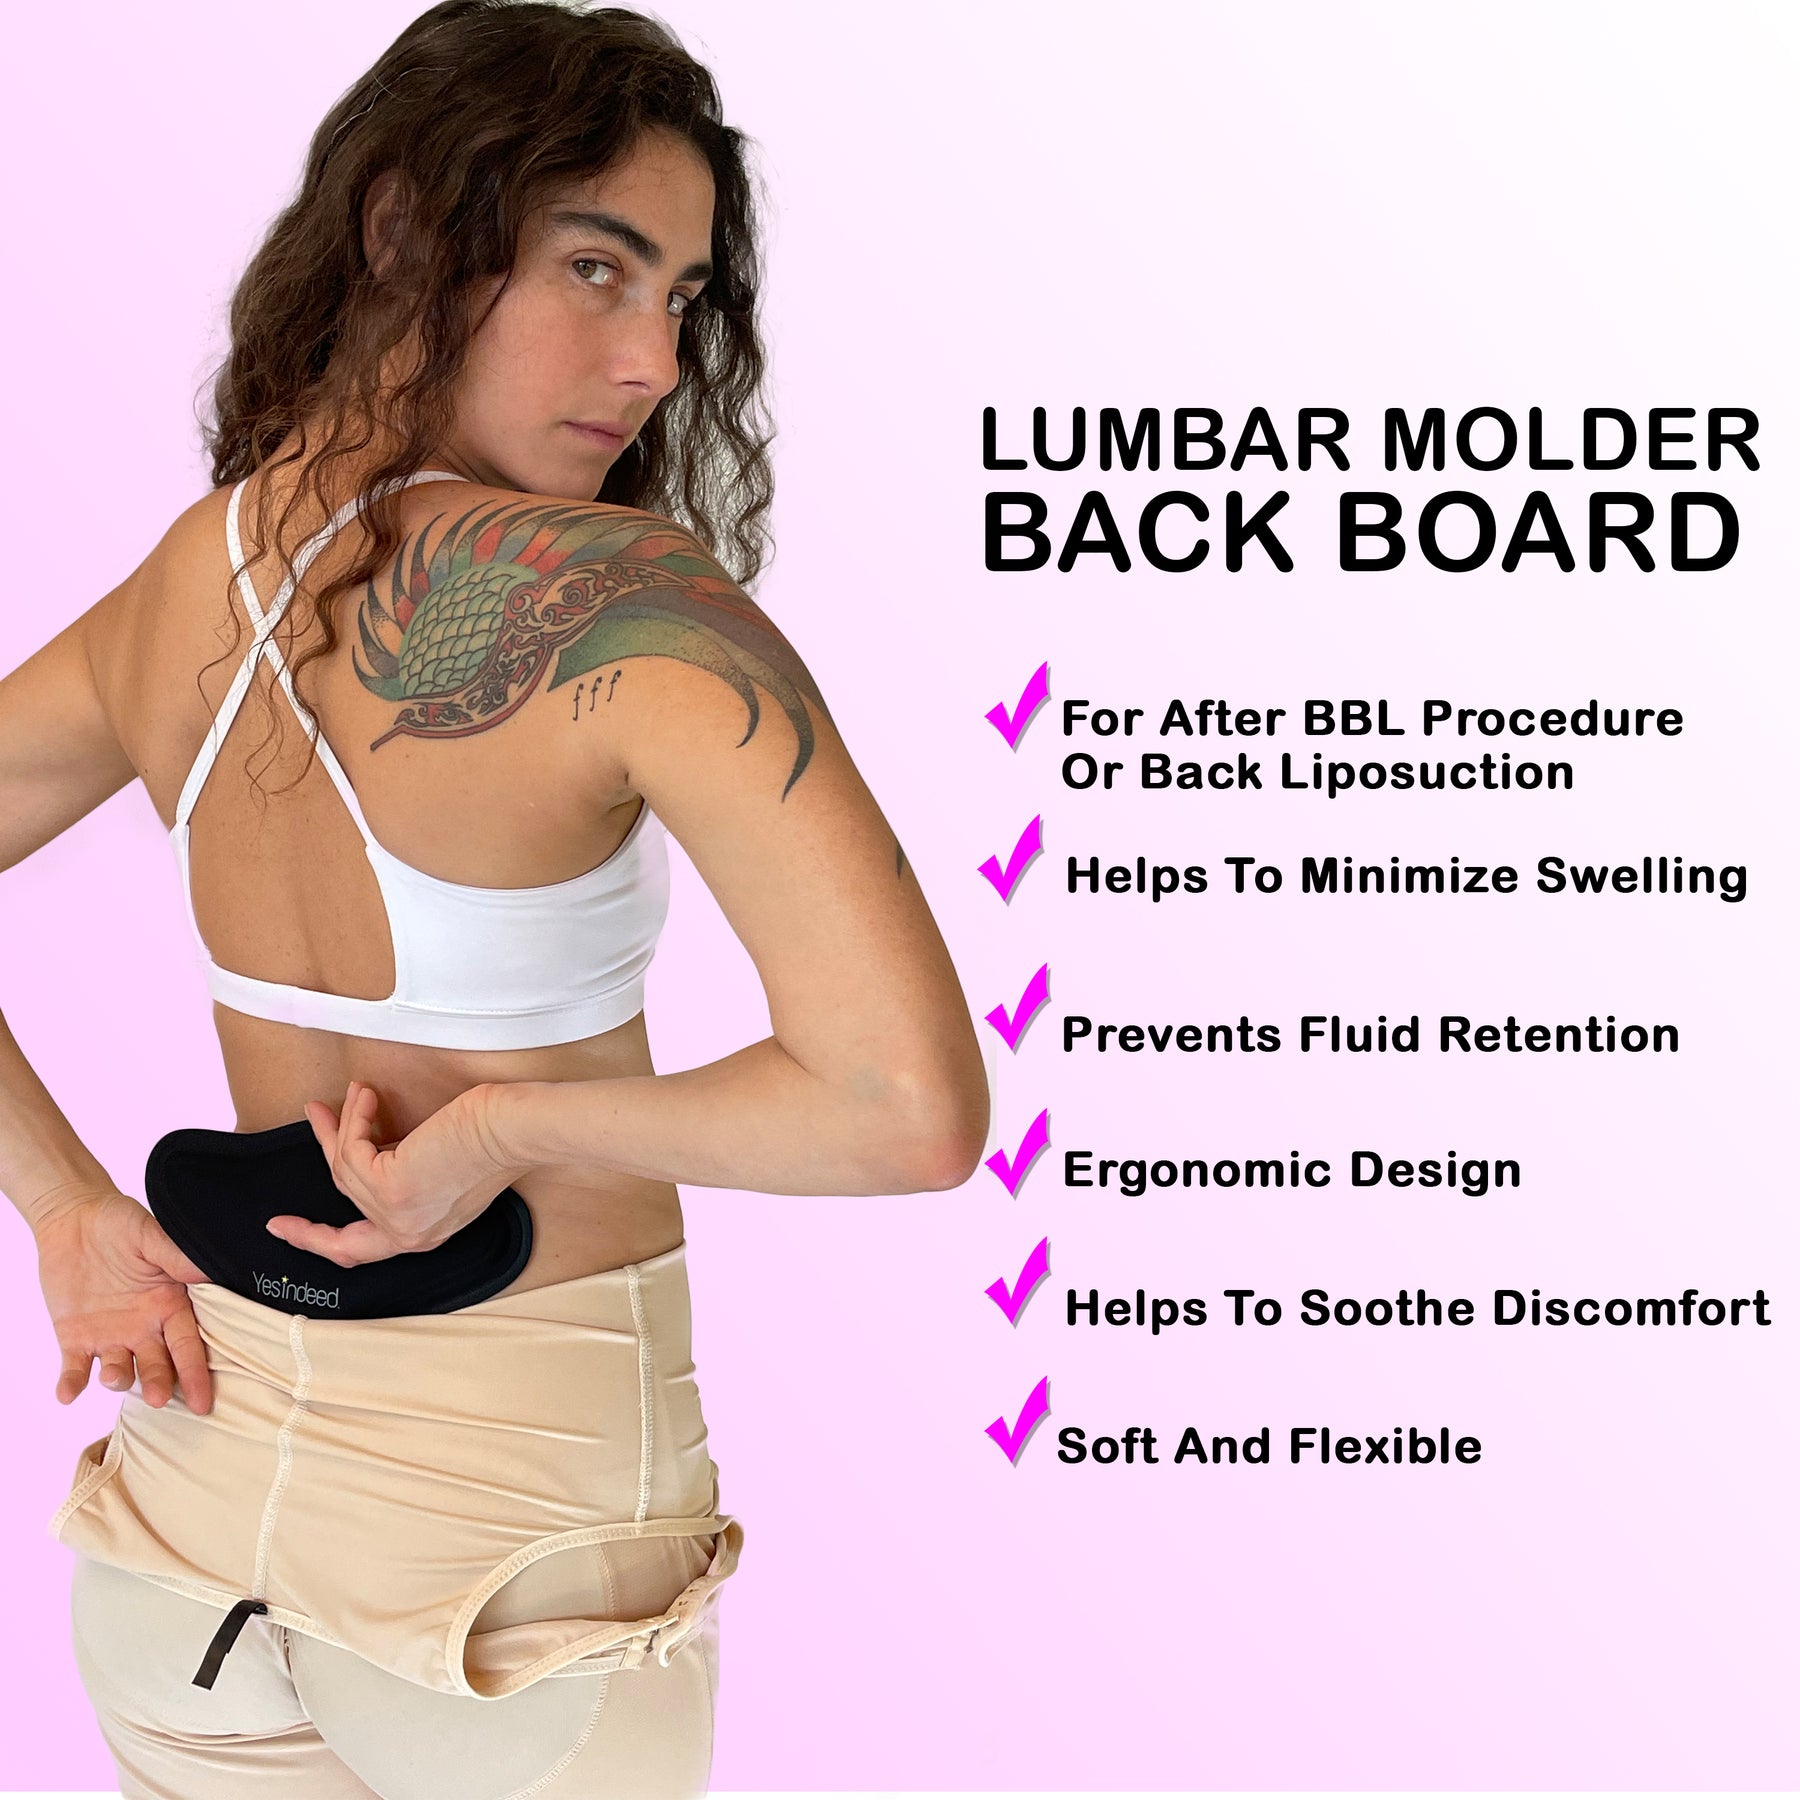 Foam Back Board, Bbl Lumbar Molder, Lipo Board Post Surgery, Back